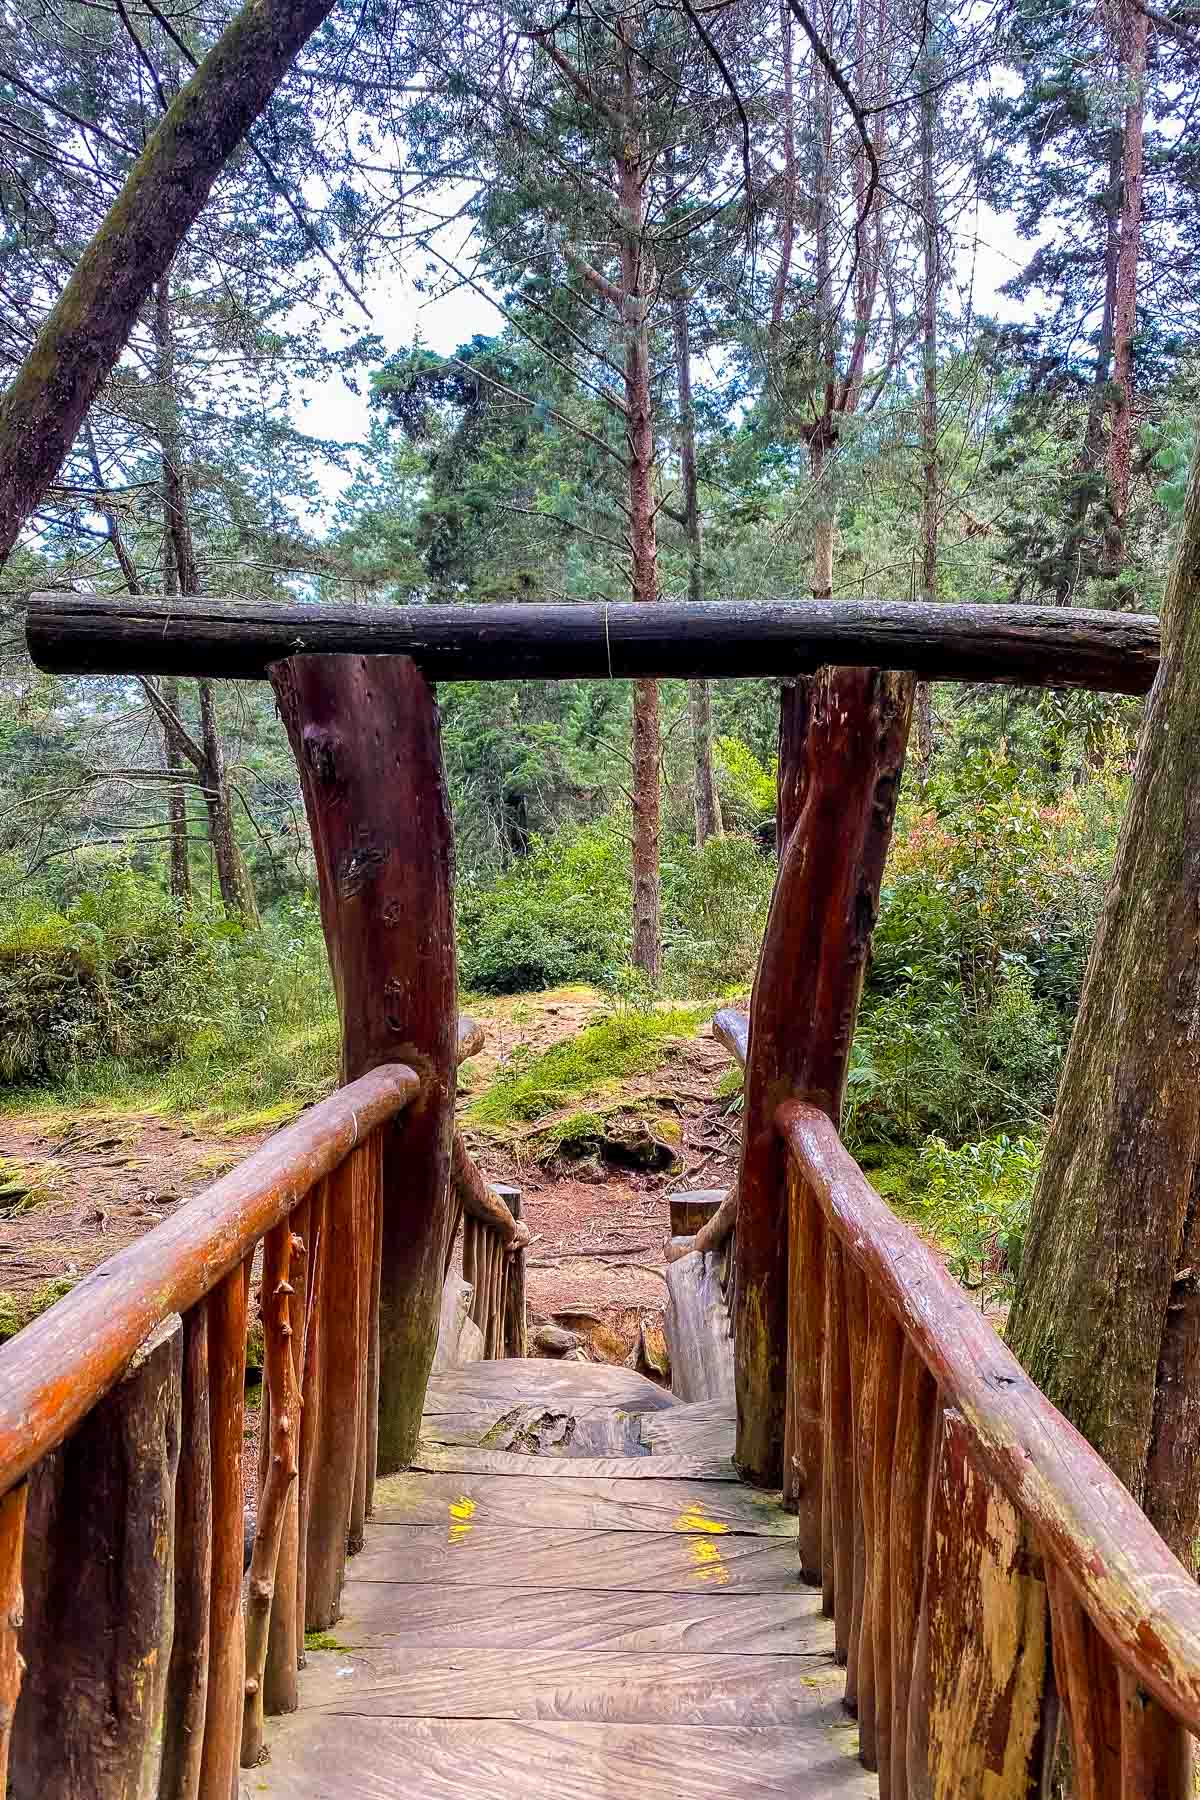 Wooden walkway in Parque Arvi, Medellin